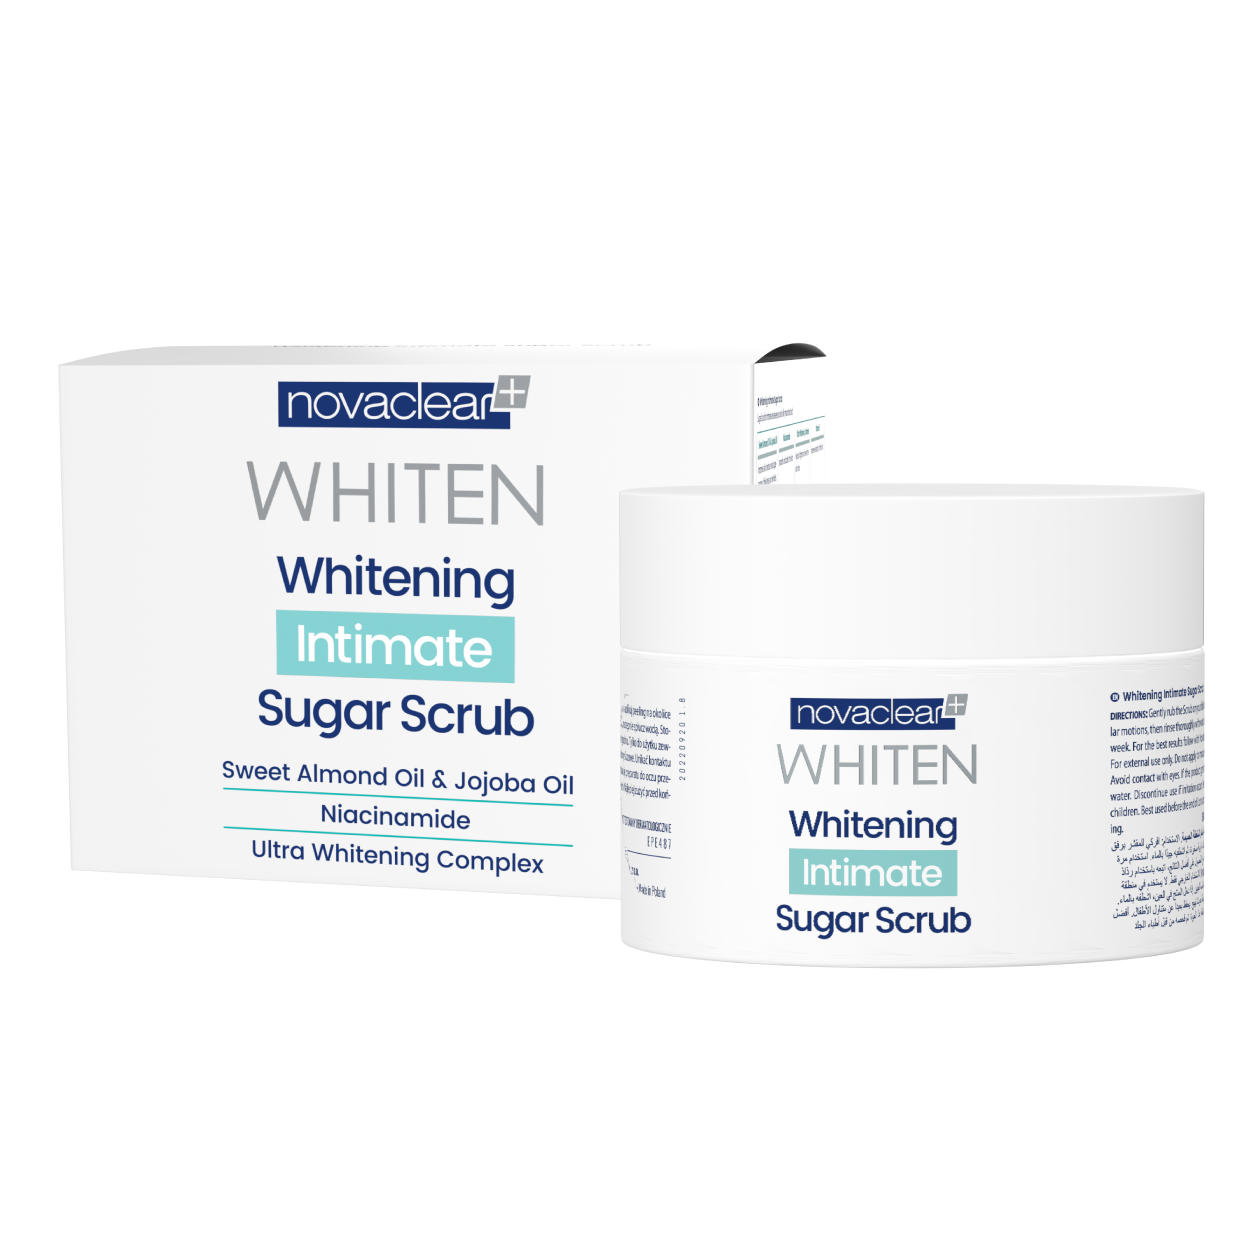 novaclear-whiten-whitening-intimate-sugar-scrub